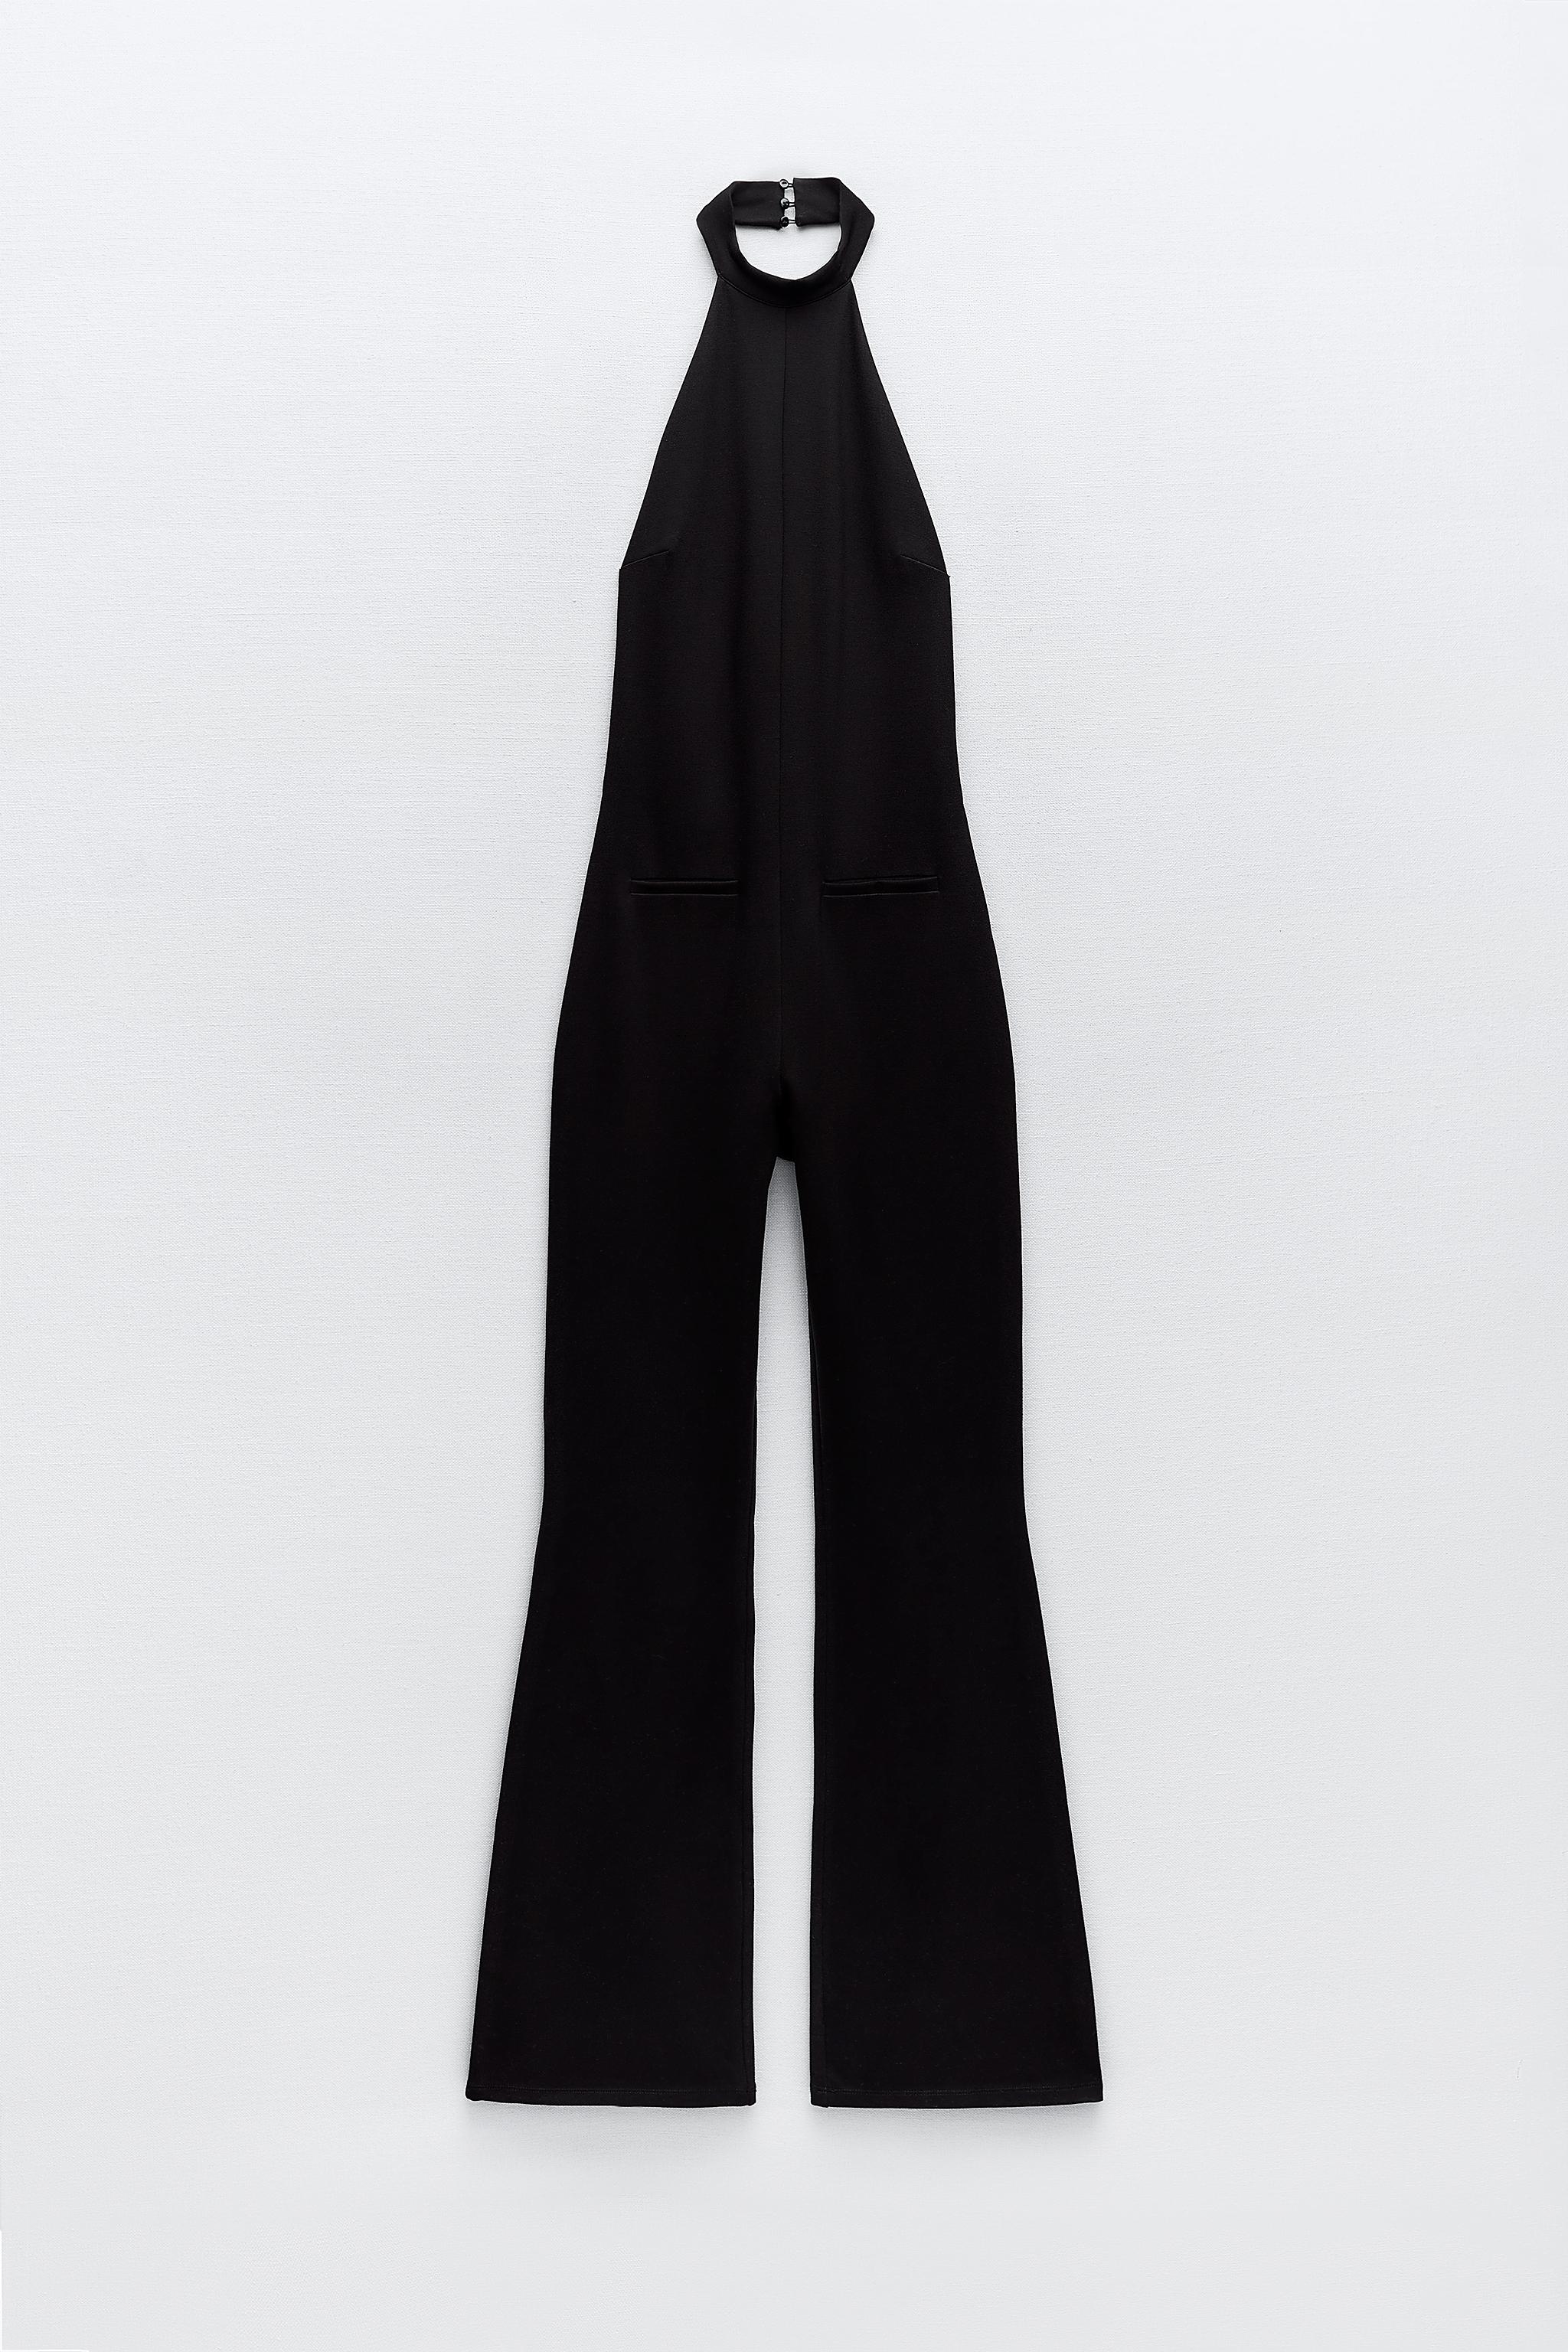 ZARA - Female - Halter bodysuit - Black - M